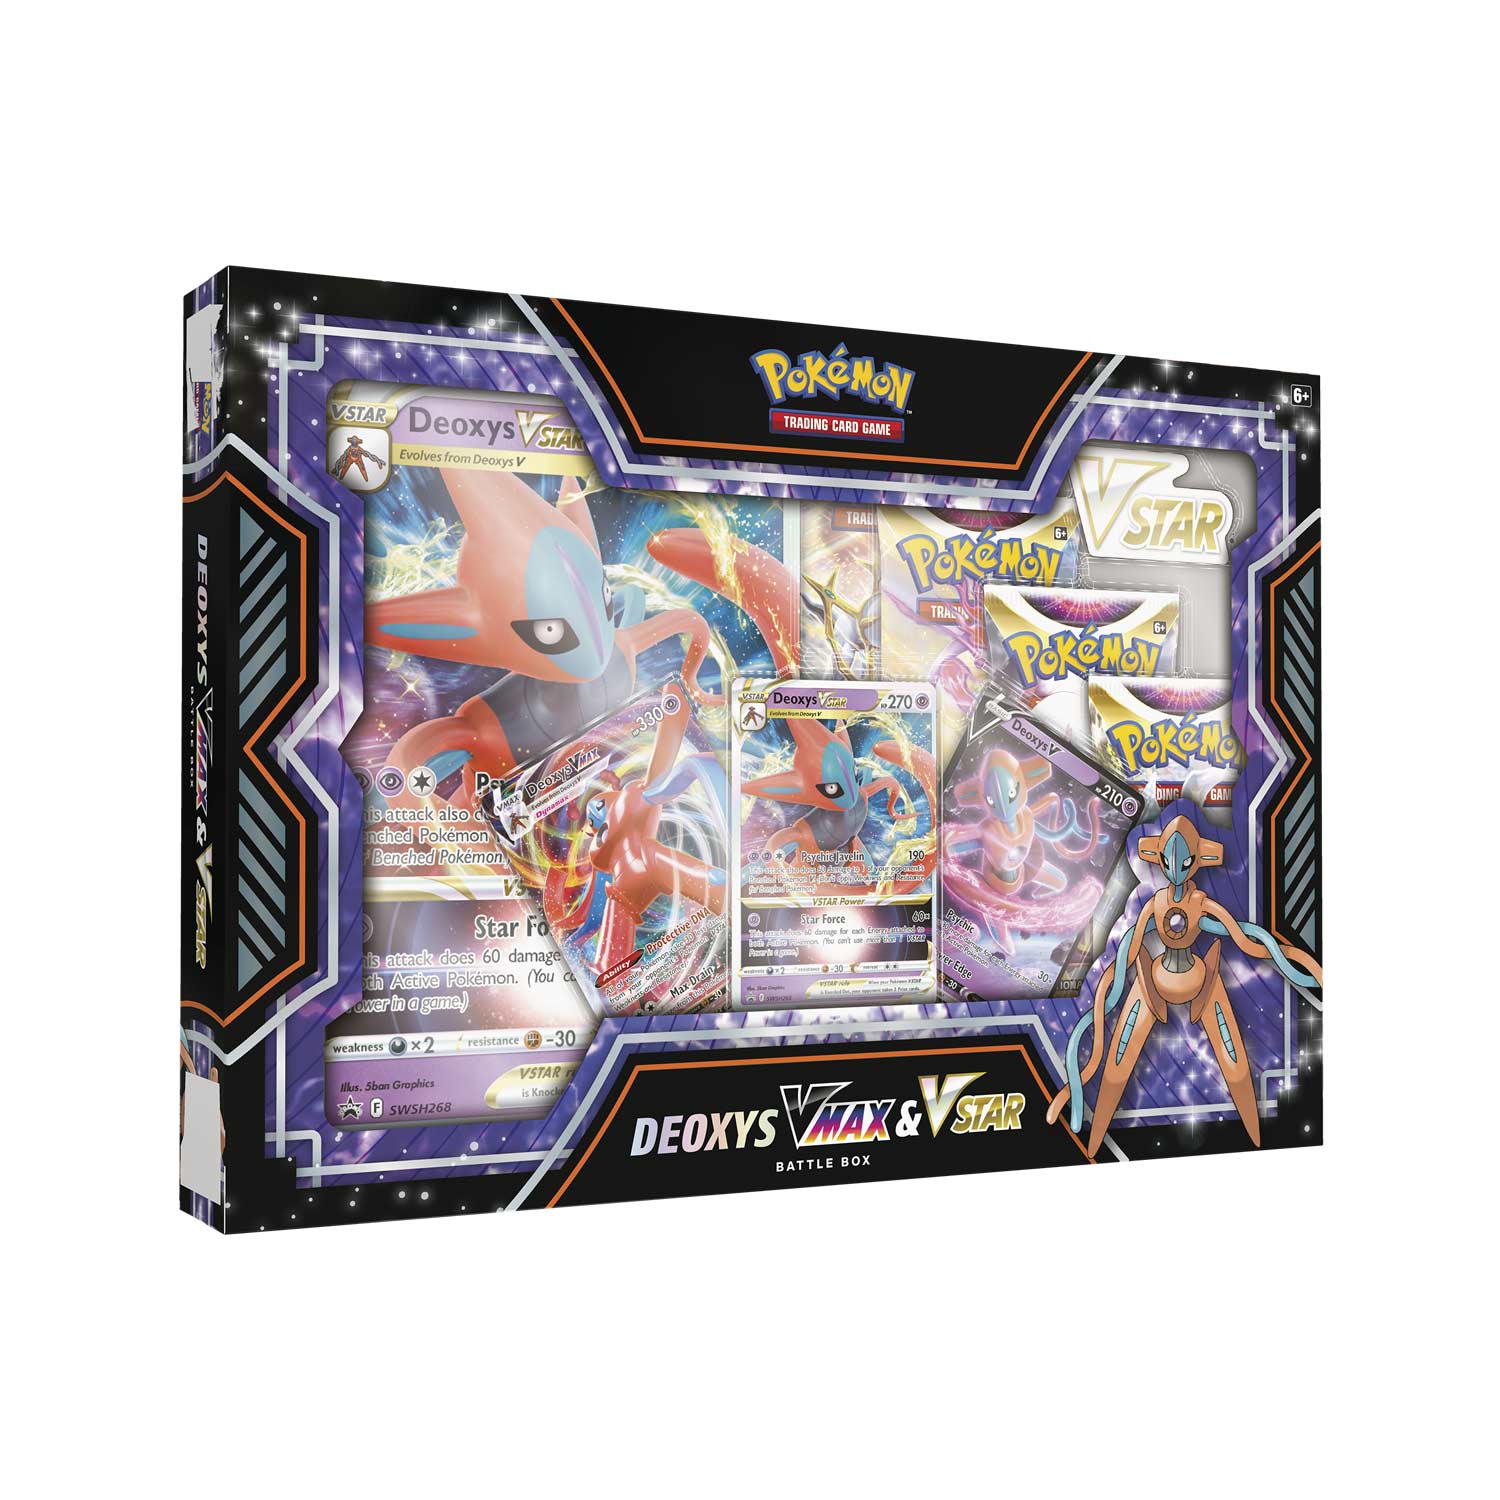 Pokémon TCG: Deoxys VMAX & VSTAR Battle Box sisältää: